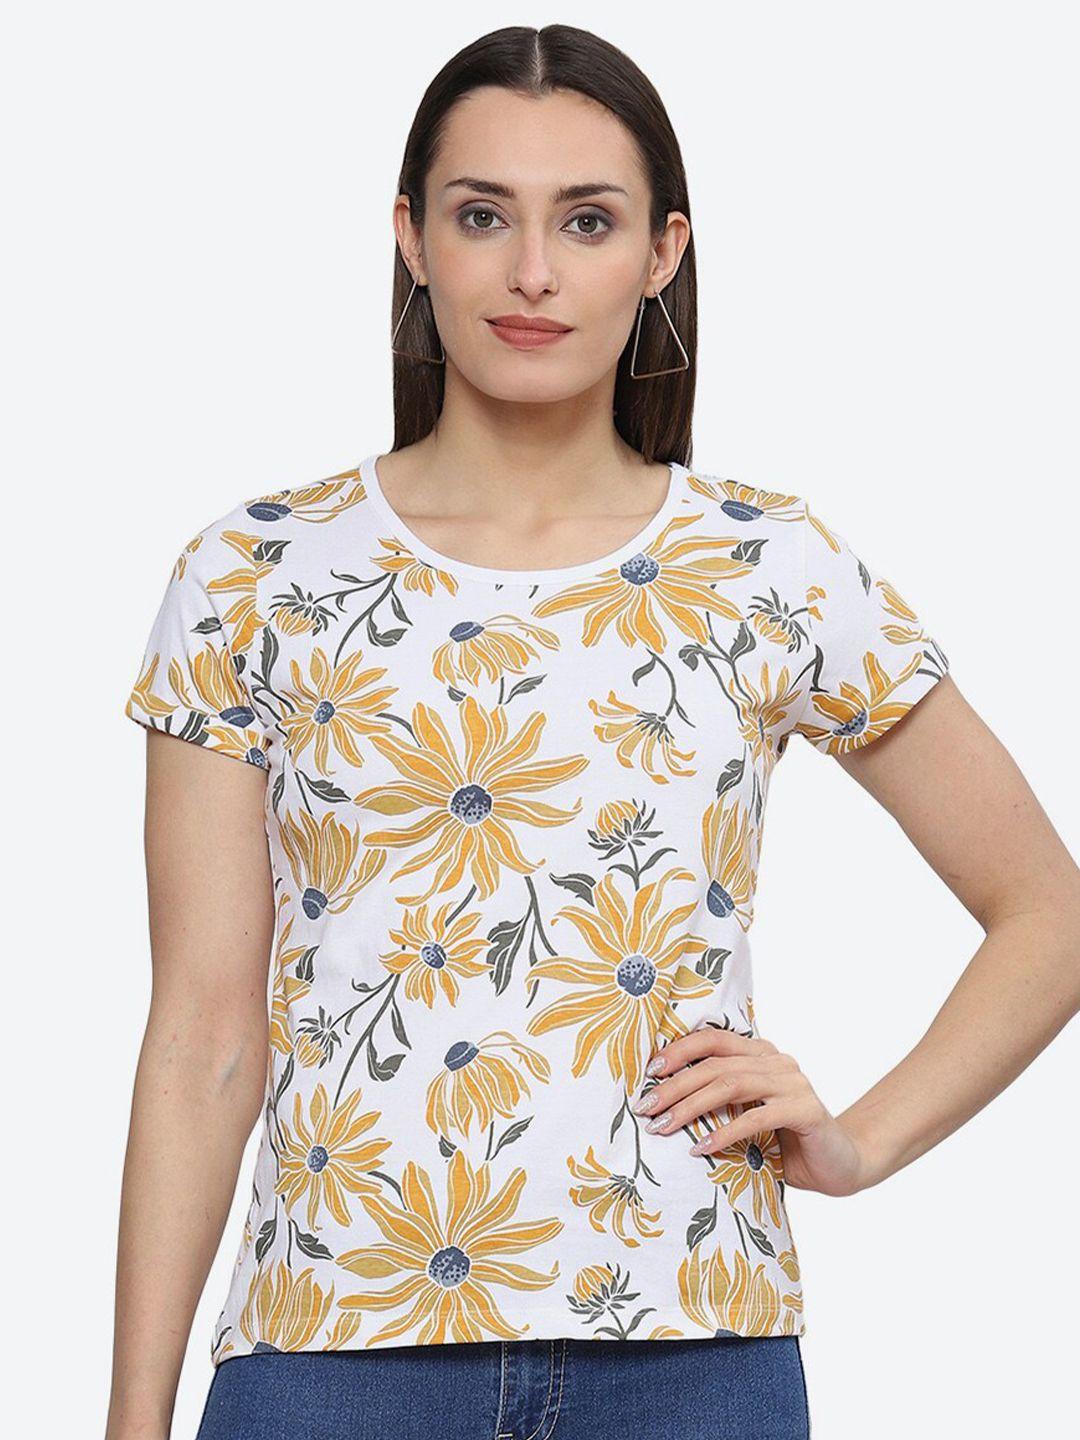 2bme floral printed t-shirt